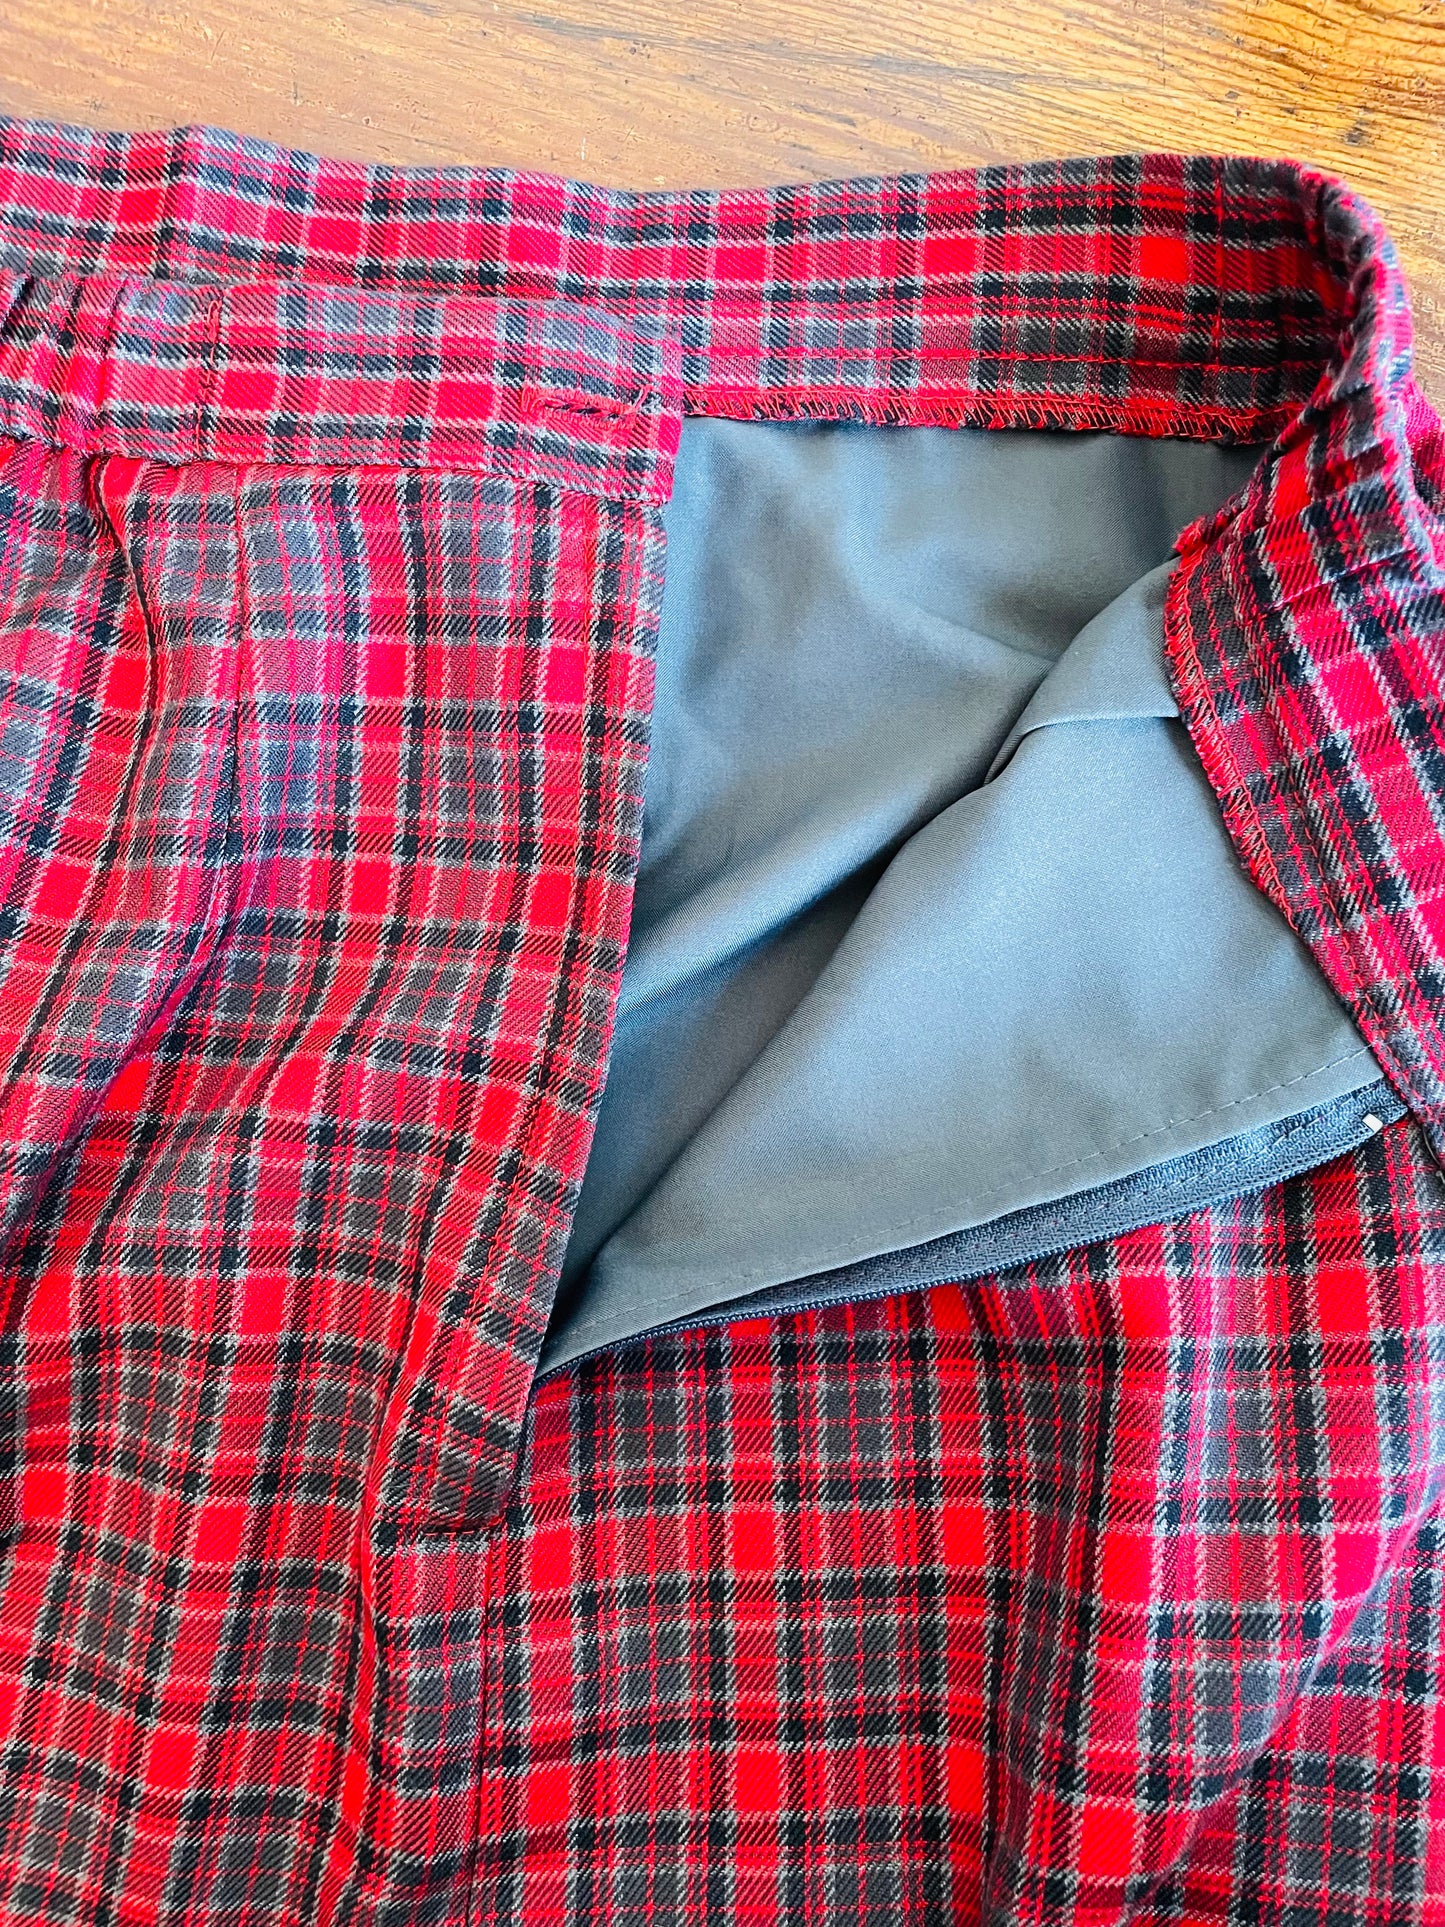 D'Allaird's Petites Plaid Kilt Skirt - Size 10 - 29" Waist - Made in Canada